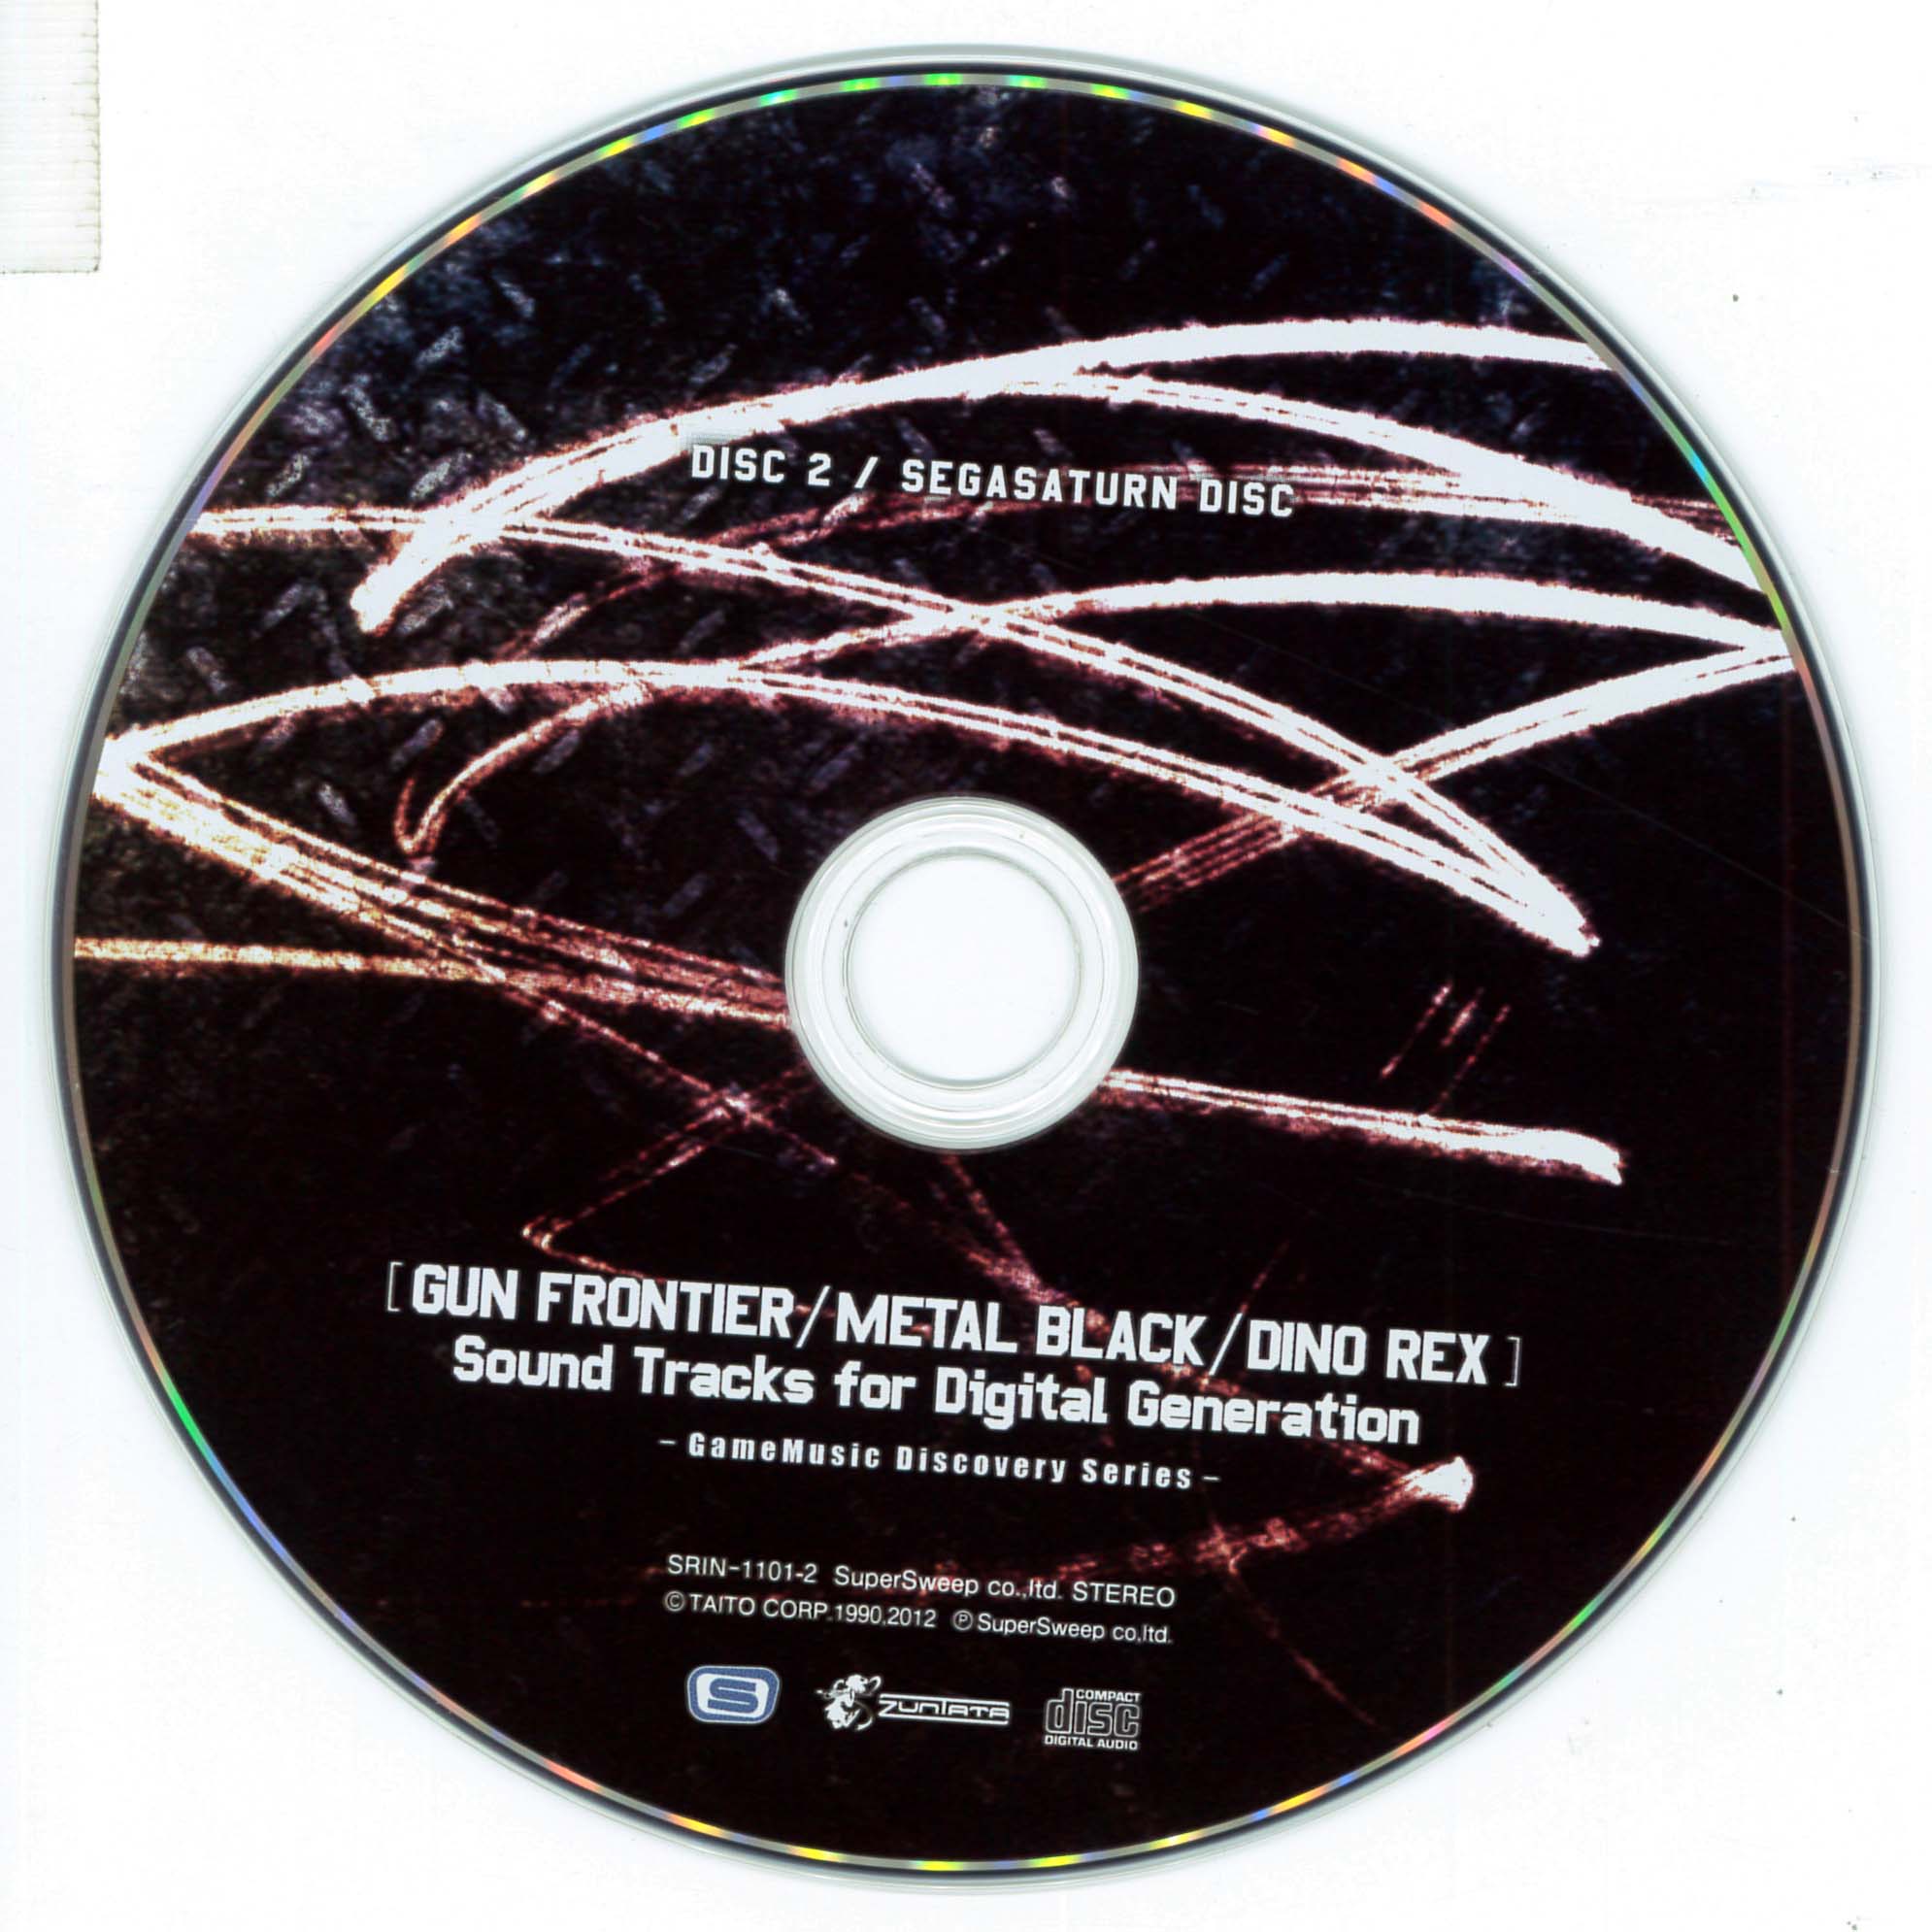 GUN FRONTIER/METAL BLACK/DINO REX Sound Tracks for Digital Generation ~GameMusic  Discovery Series~ (2012) MP3 - Download GUN FRONTIER/METAL BLACK/DINO REX  Sound Tracks for Digital Generation ~GameMusic Discovery Series~ (2012)  Soundtracks for FREE!